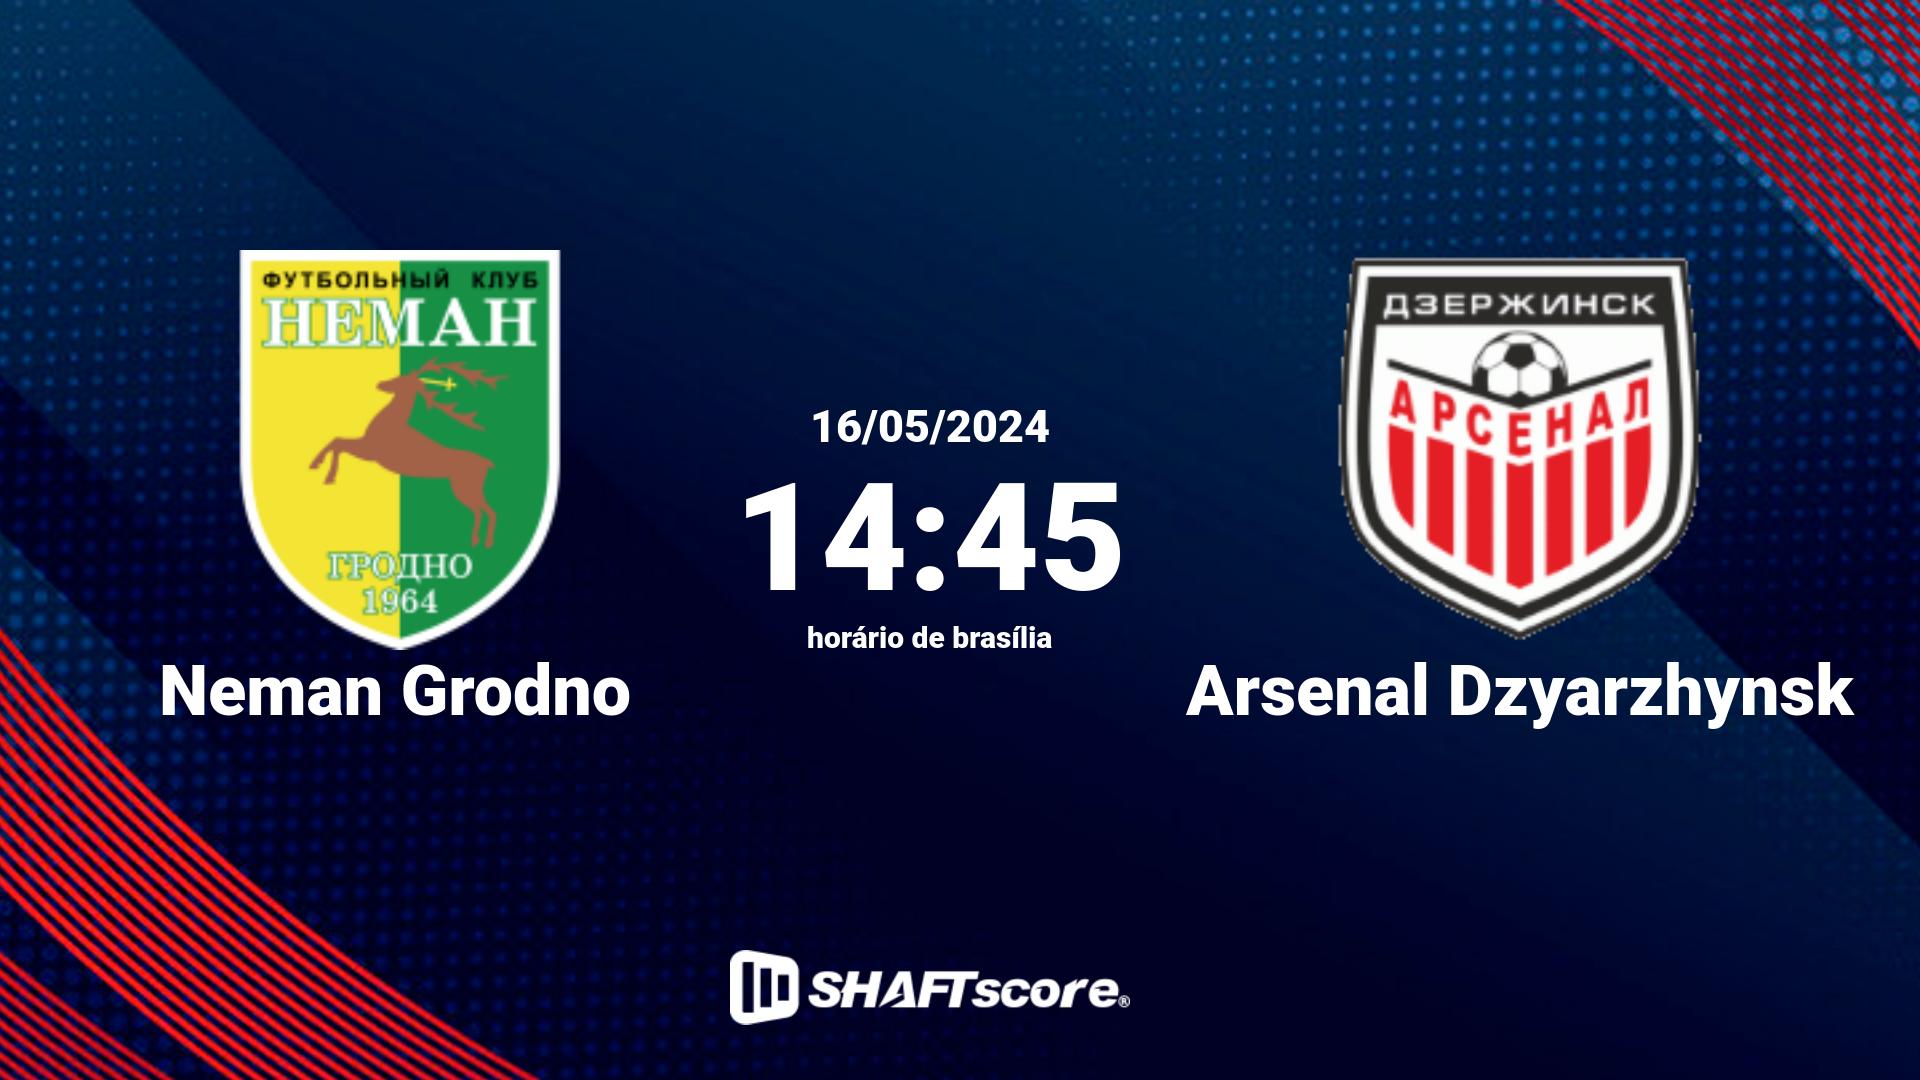 Estatísticas do jogo Neman Grodno vs Arsenal Dzyarzhynsk 16.05 14:45